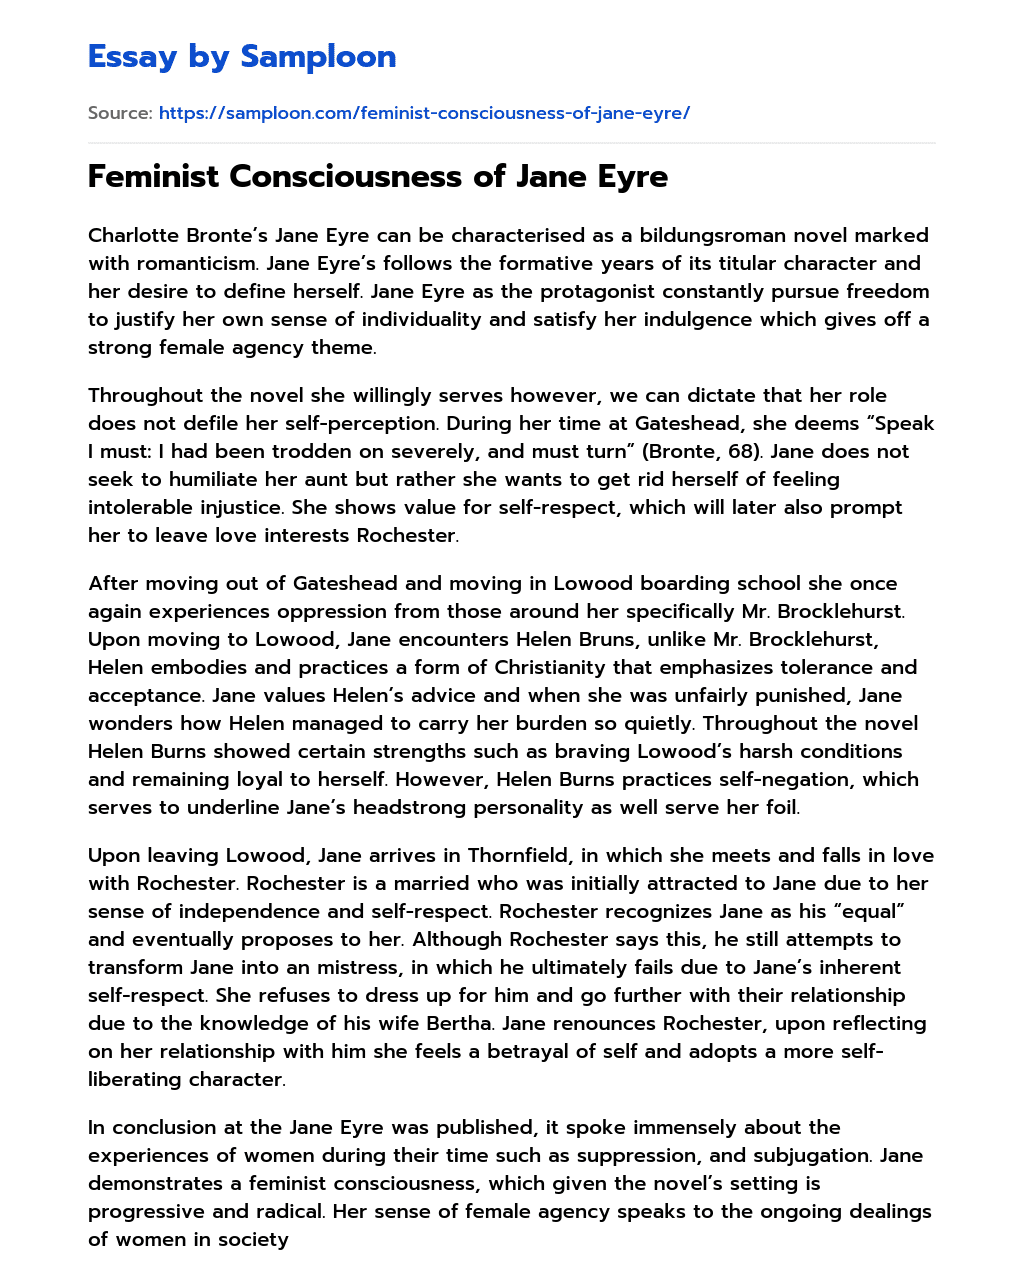 Feminist Consciousness of Jane Eyre essay